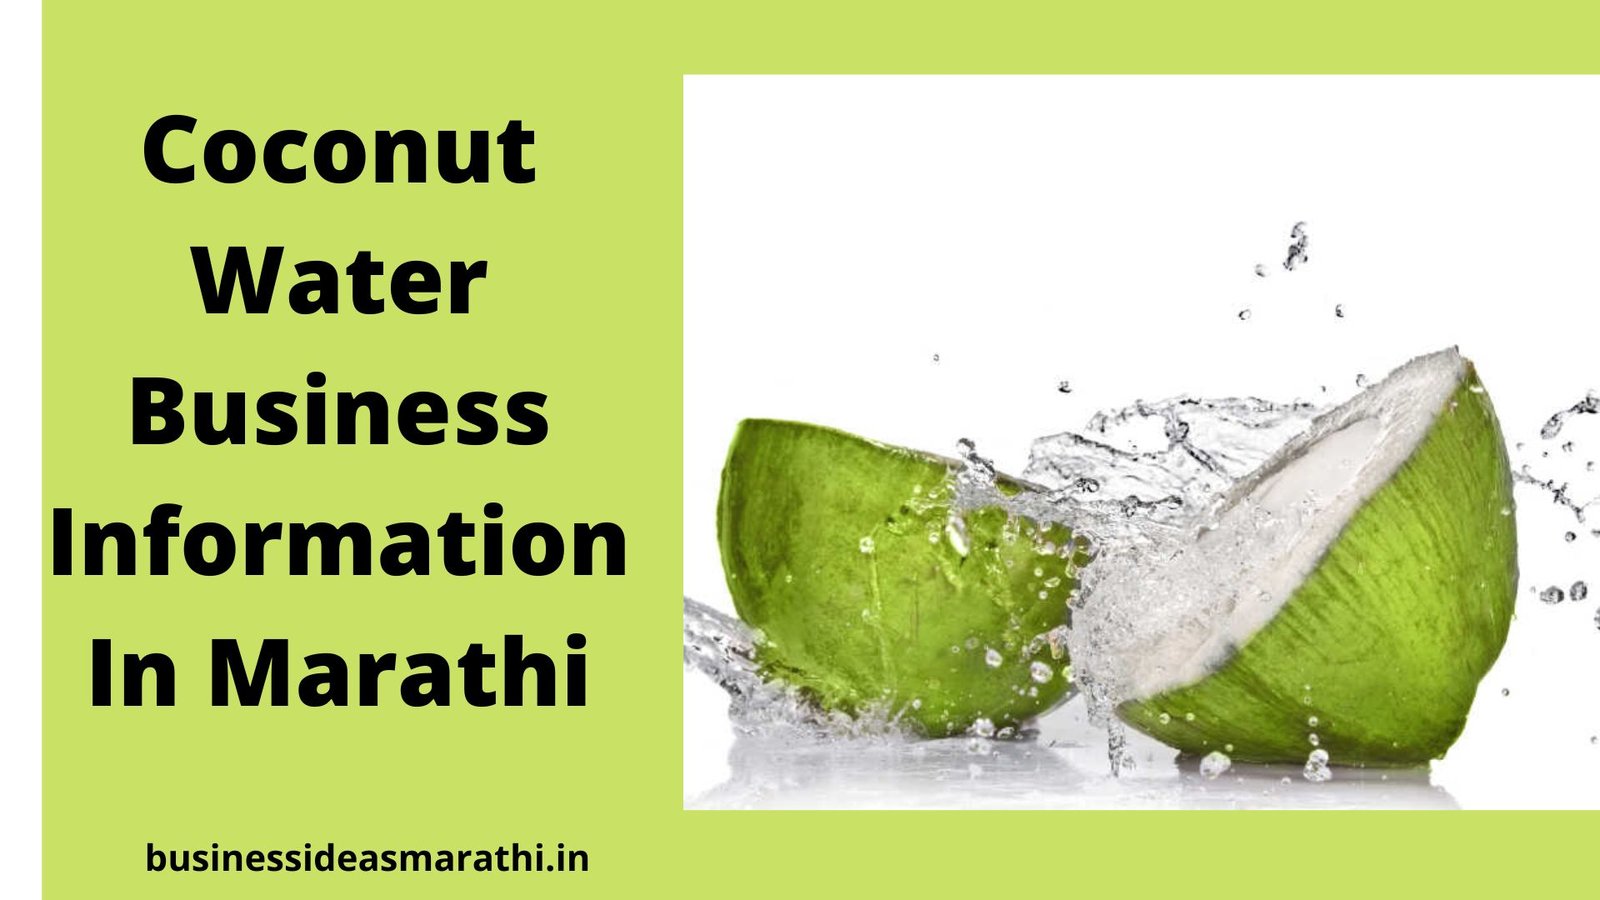 Coconut Water Business Information In Marathi